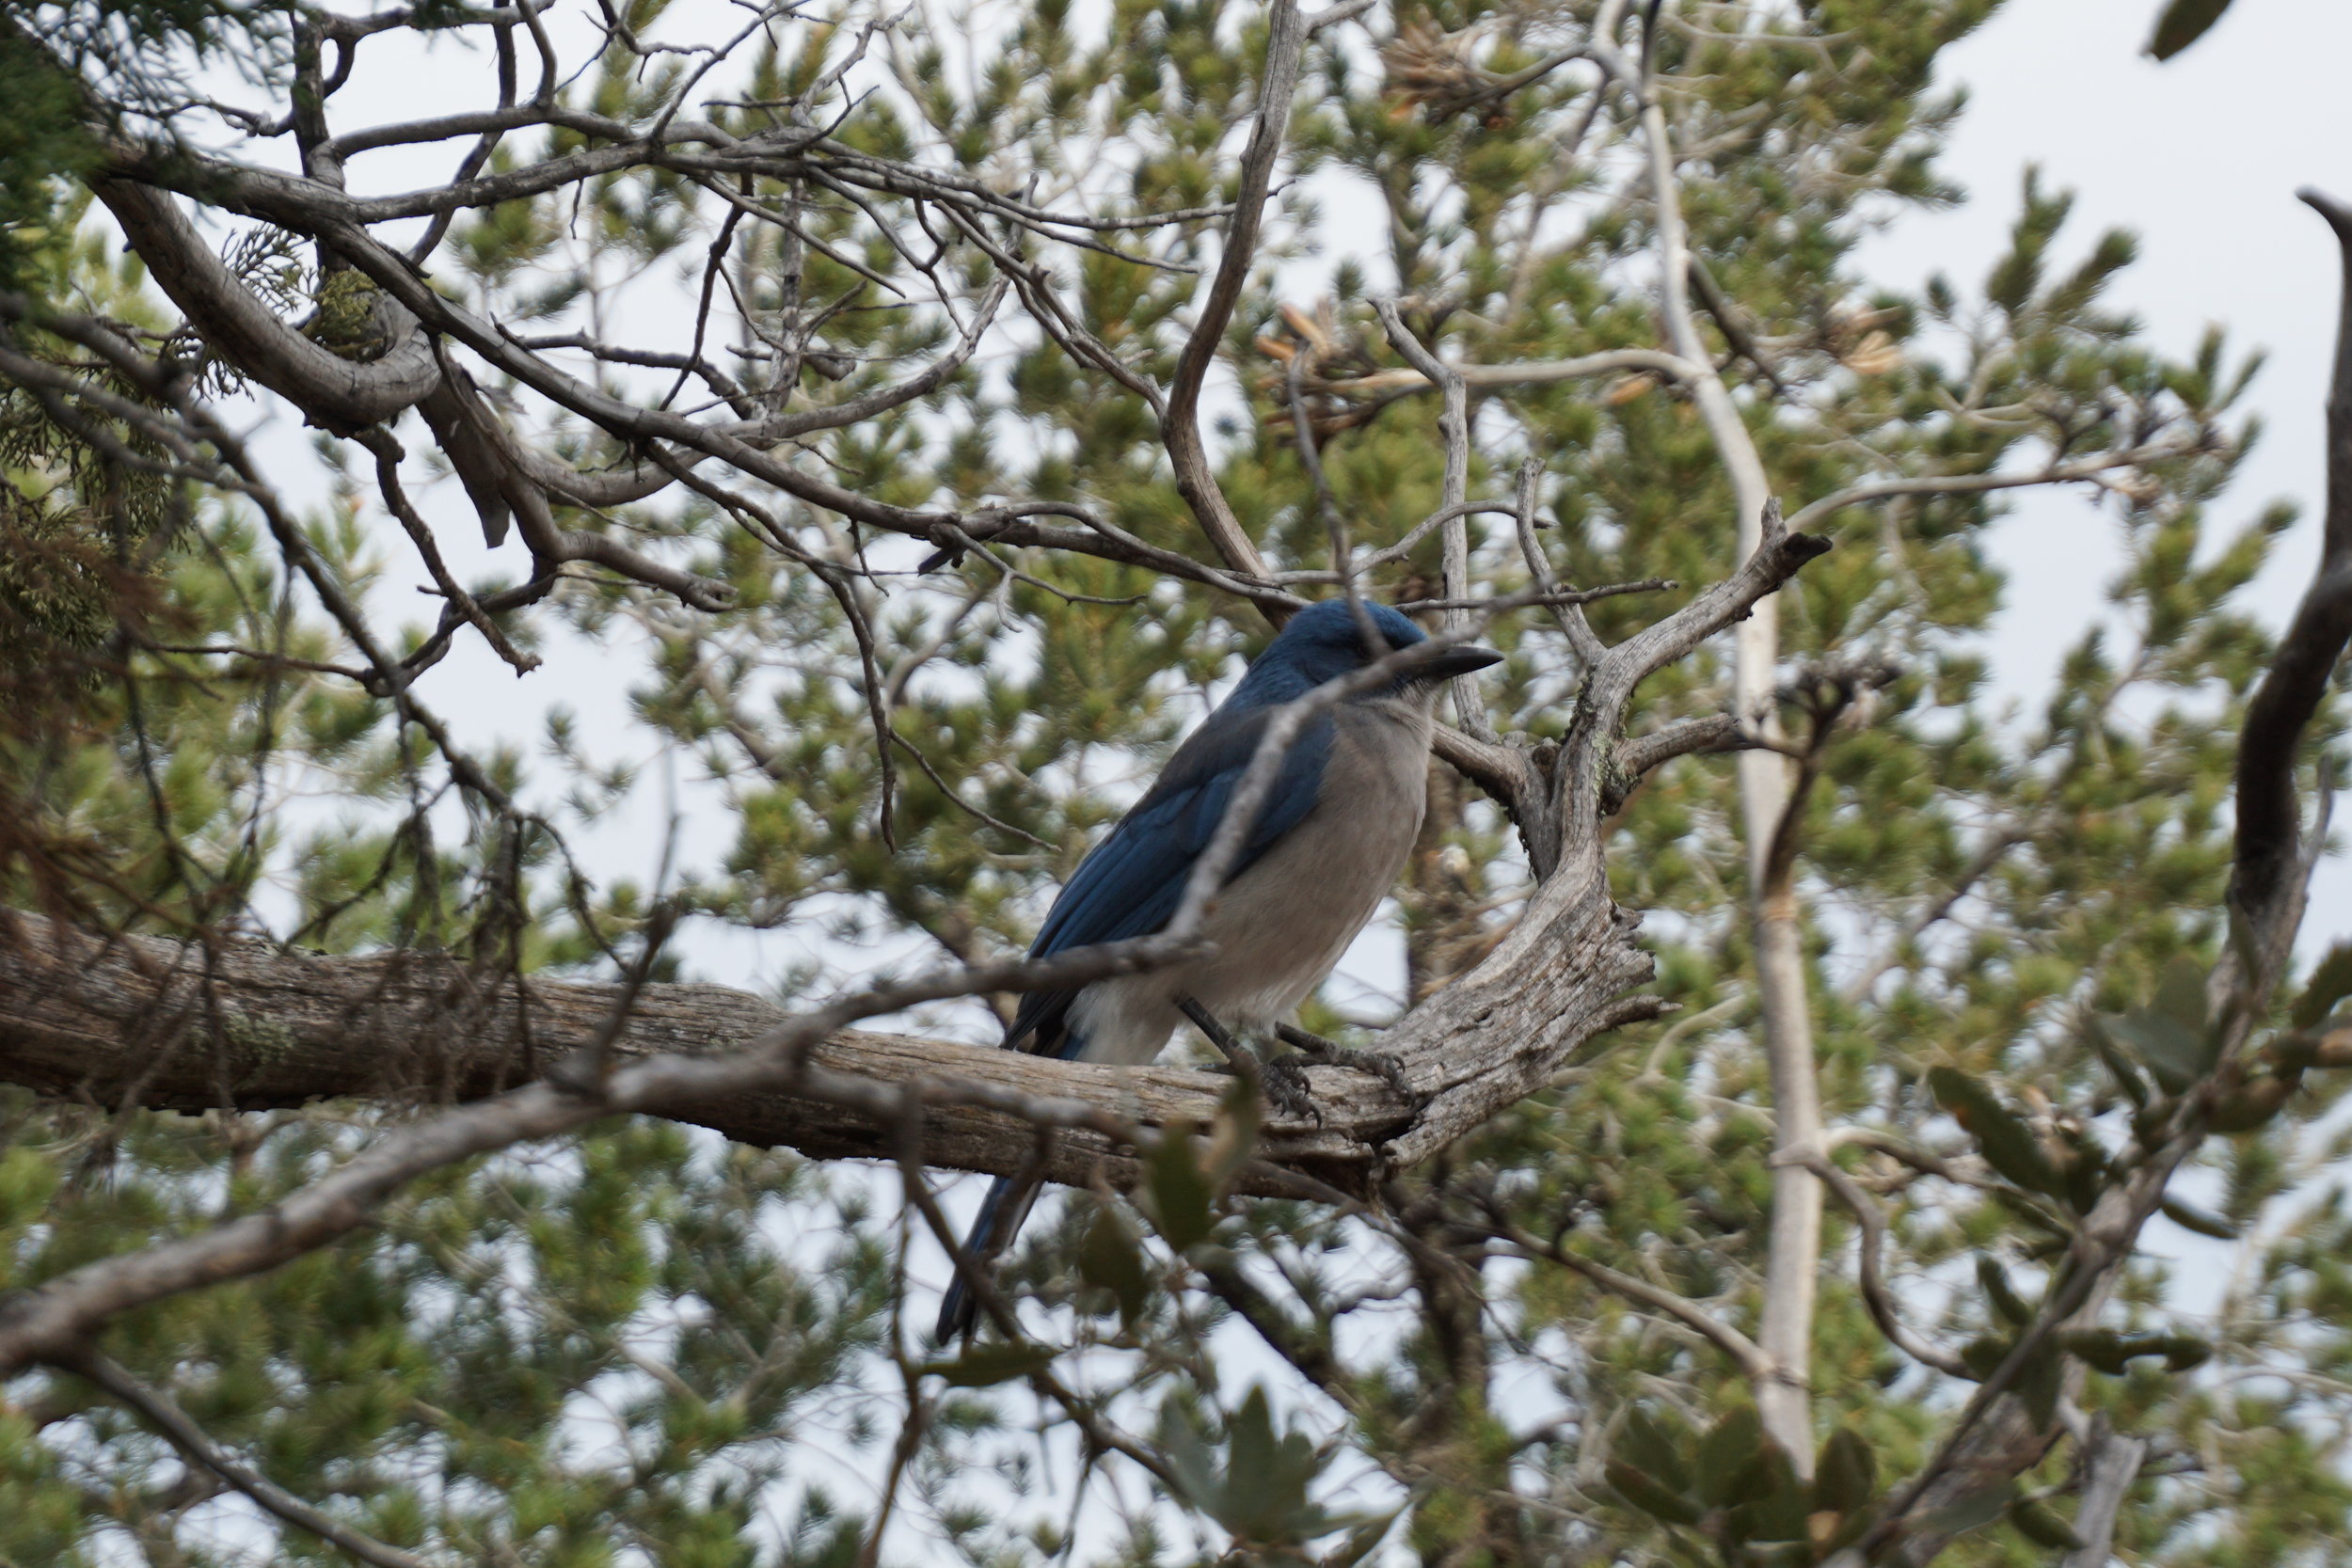 A blue Mexican jay bird in Texas desert